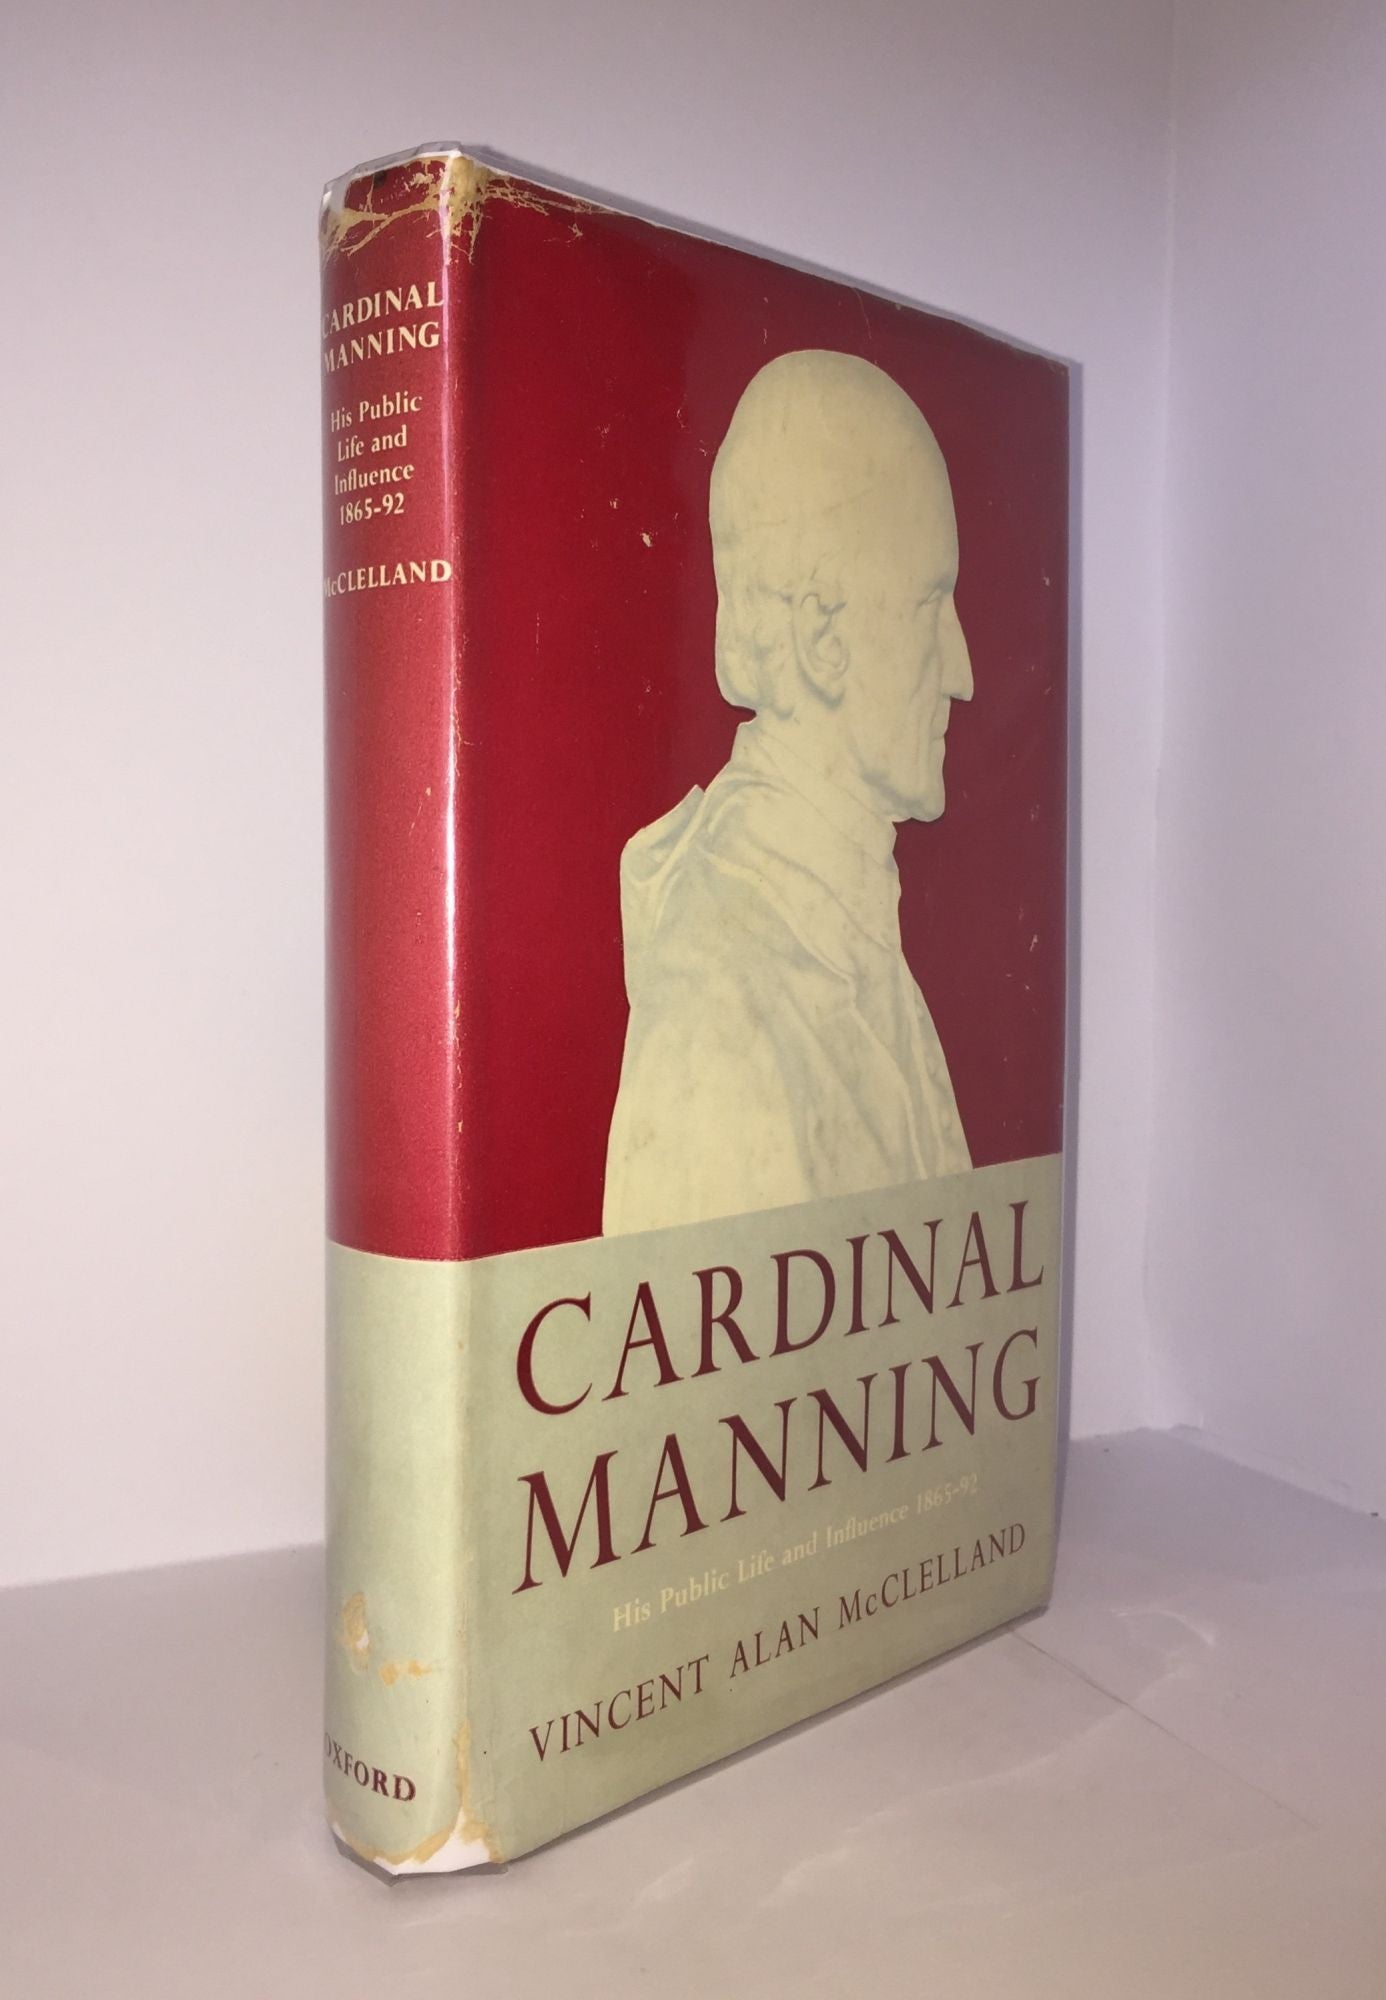 McCLELLAND Vincent Alan - Cardinal Manning His Public Life and Influence 1865-92